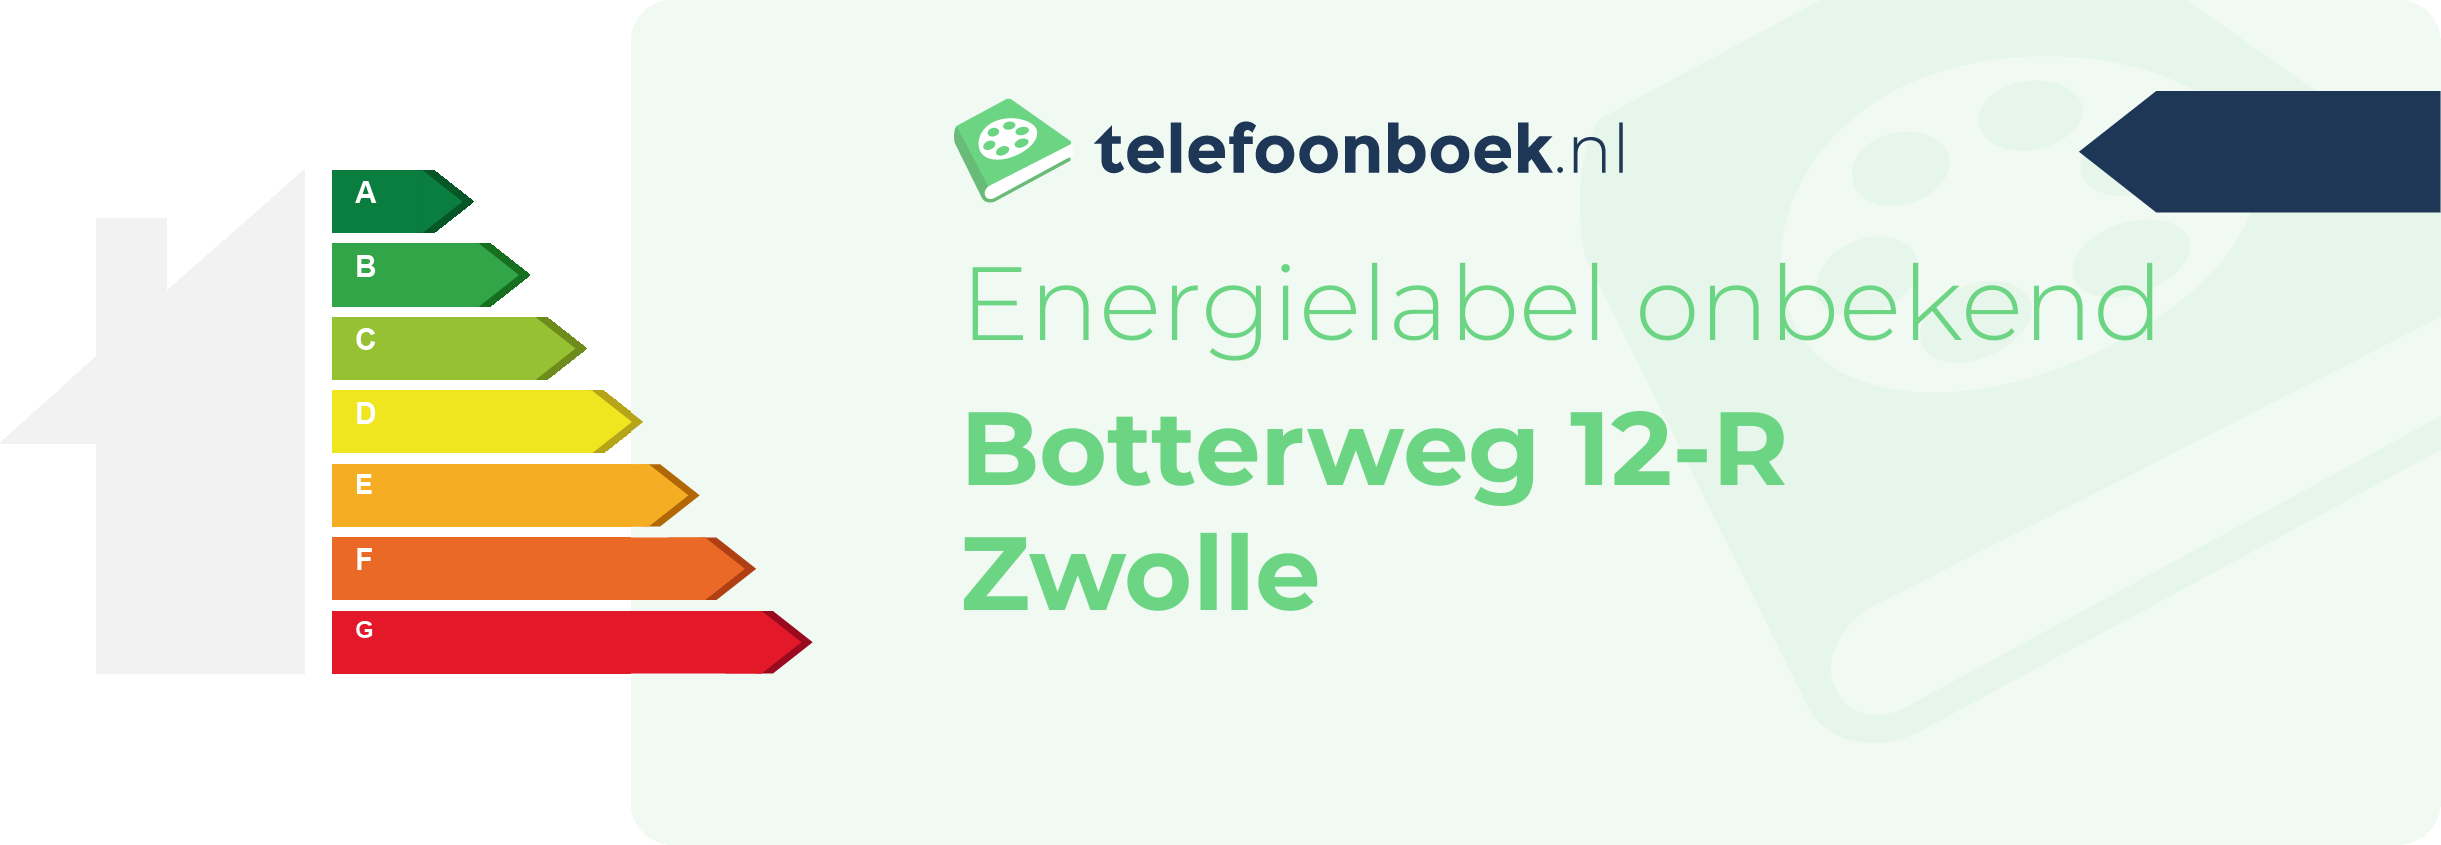 Energielabel Botterweg 12-R Zwolle